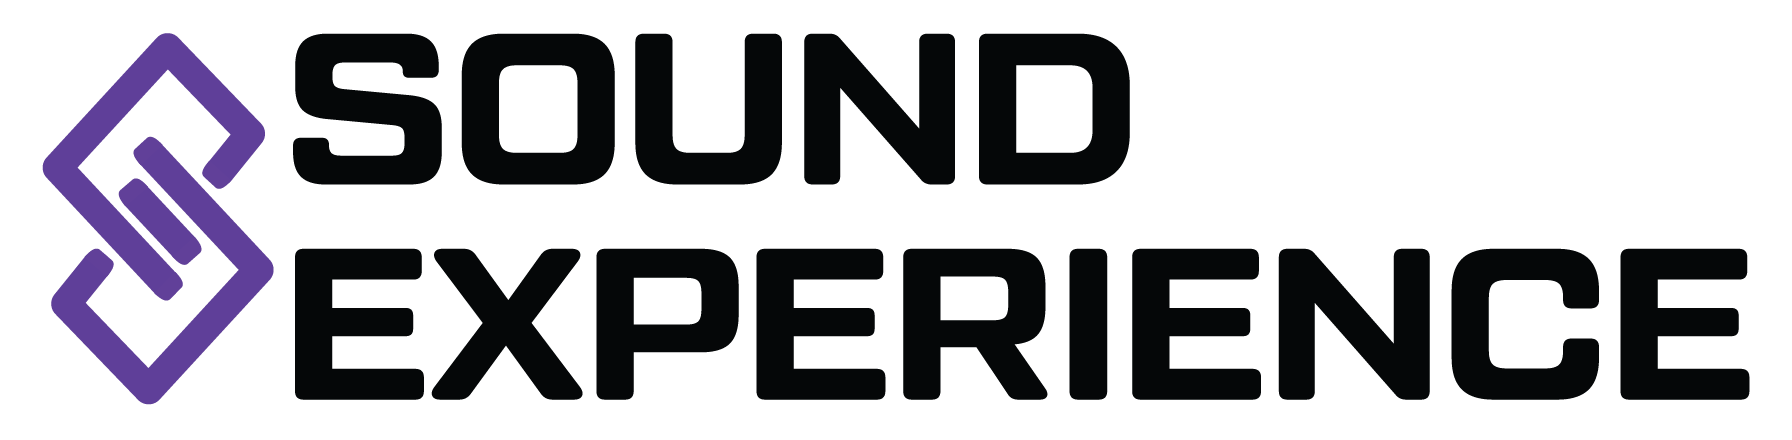 Sound Experience Logo